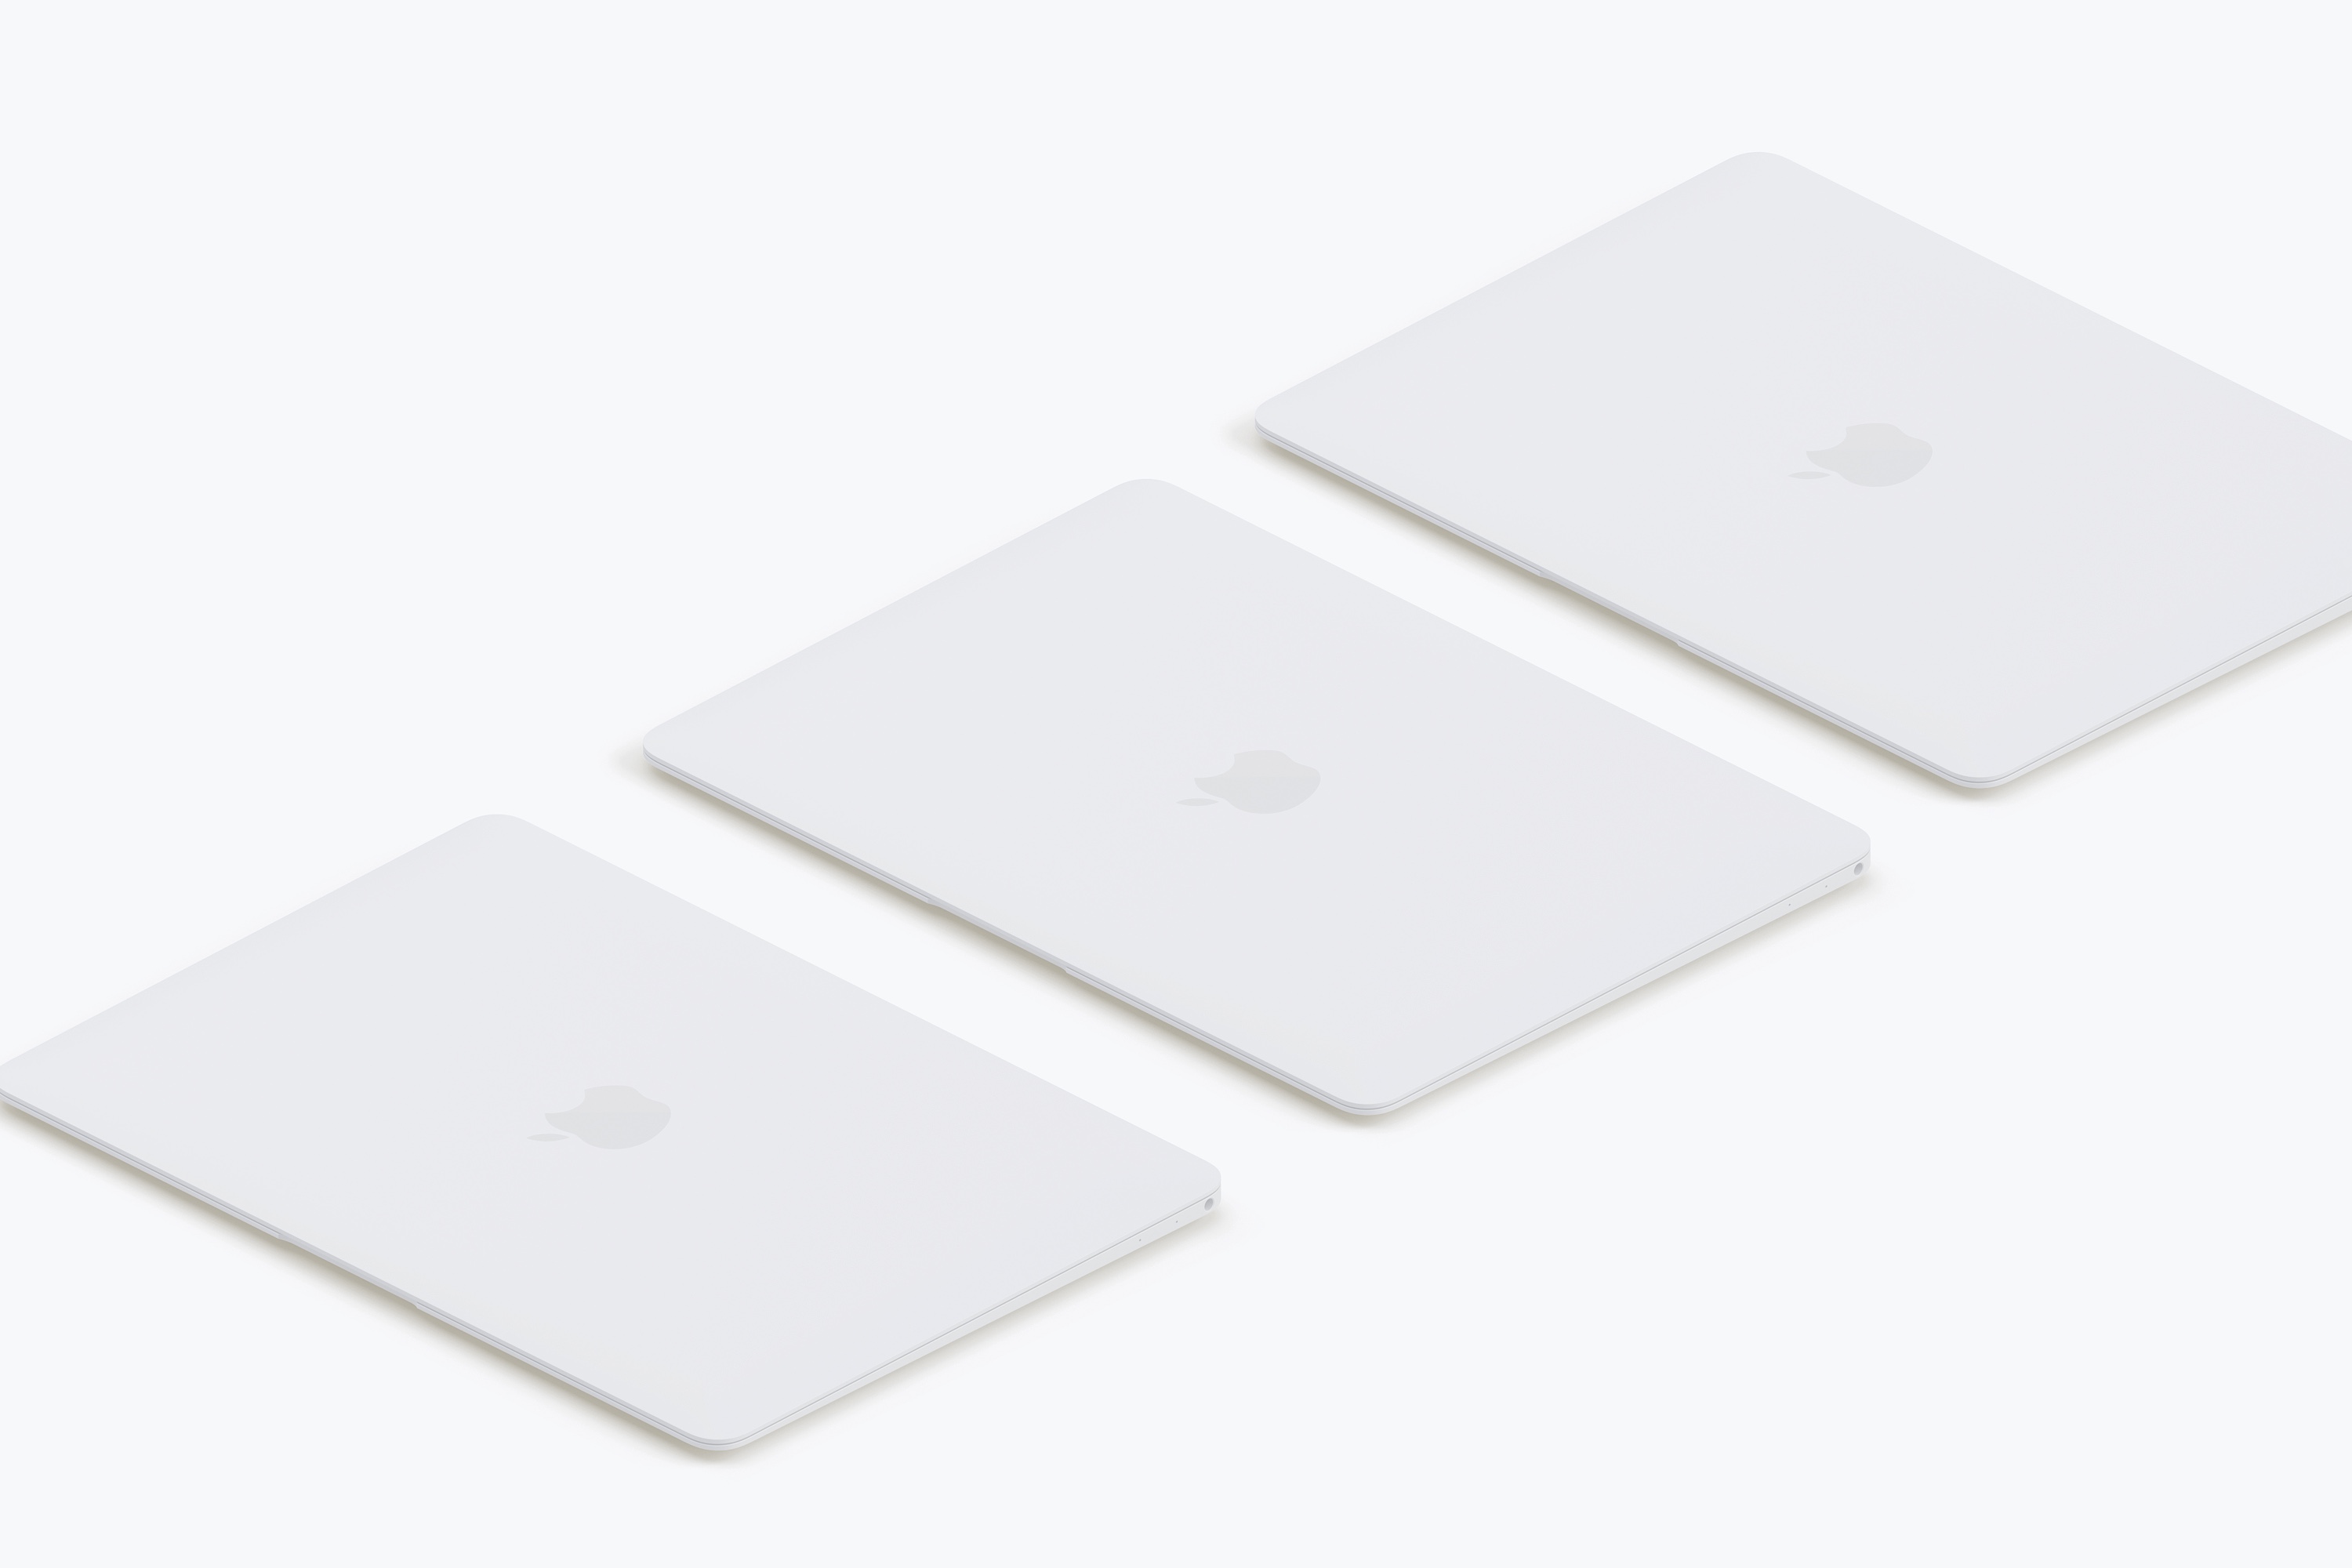 高端笔记本电脑MacBook左视图样机素材02 Clay MacBook Mockup, Isometric Left View 02插图(2)